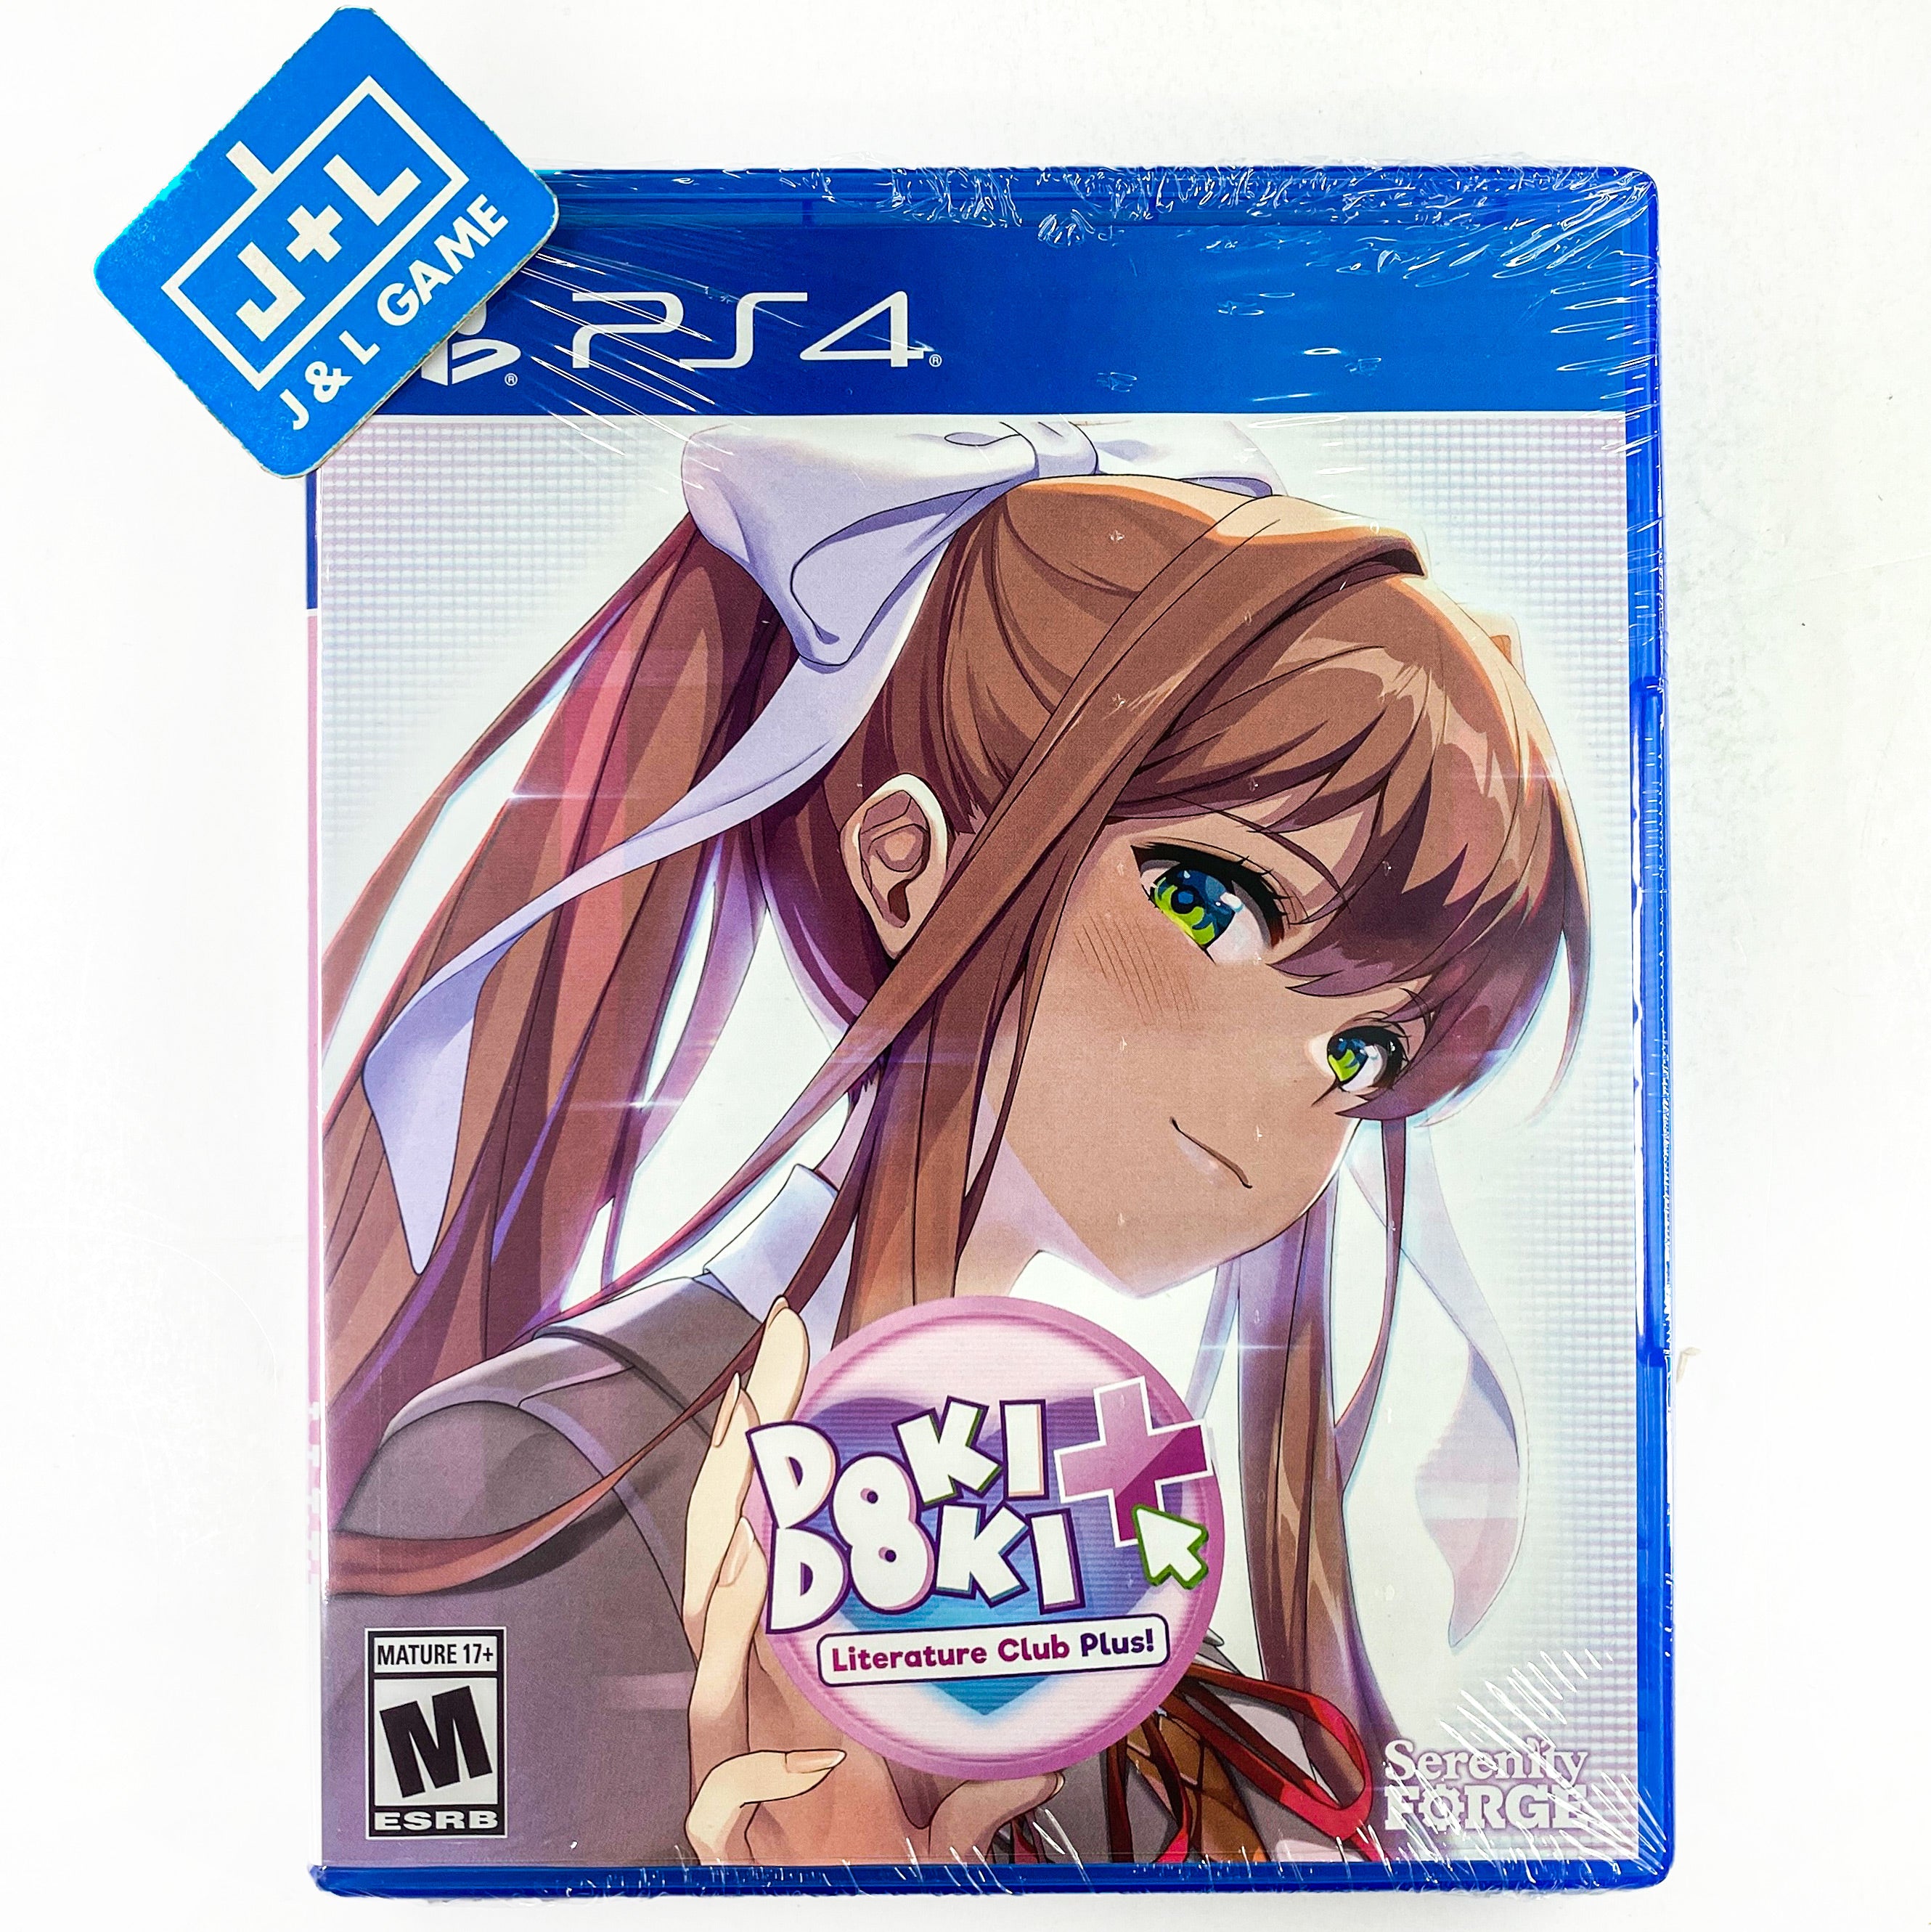 Doki Doki Literature Club Plus! Premium Physical Edition – (PS4) PlayStation 4 Video Games Serenity Forge   